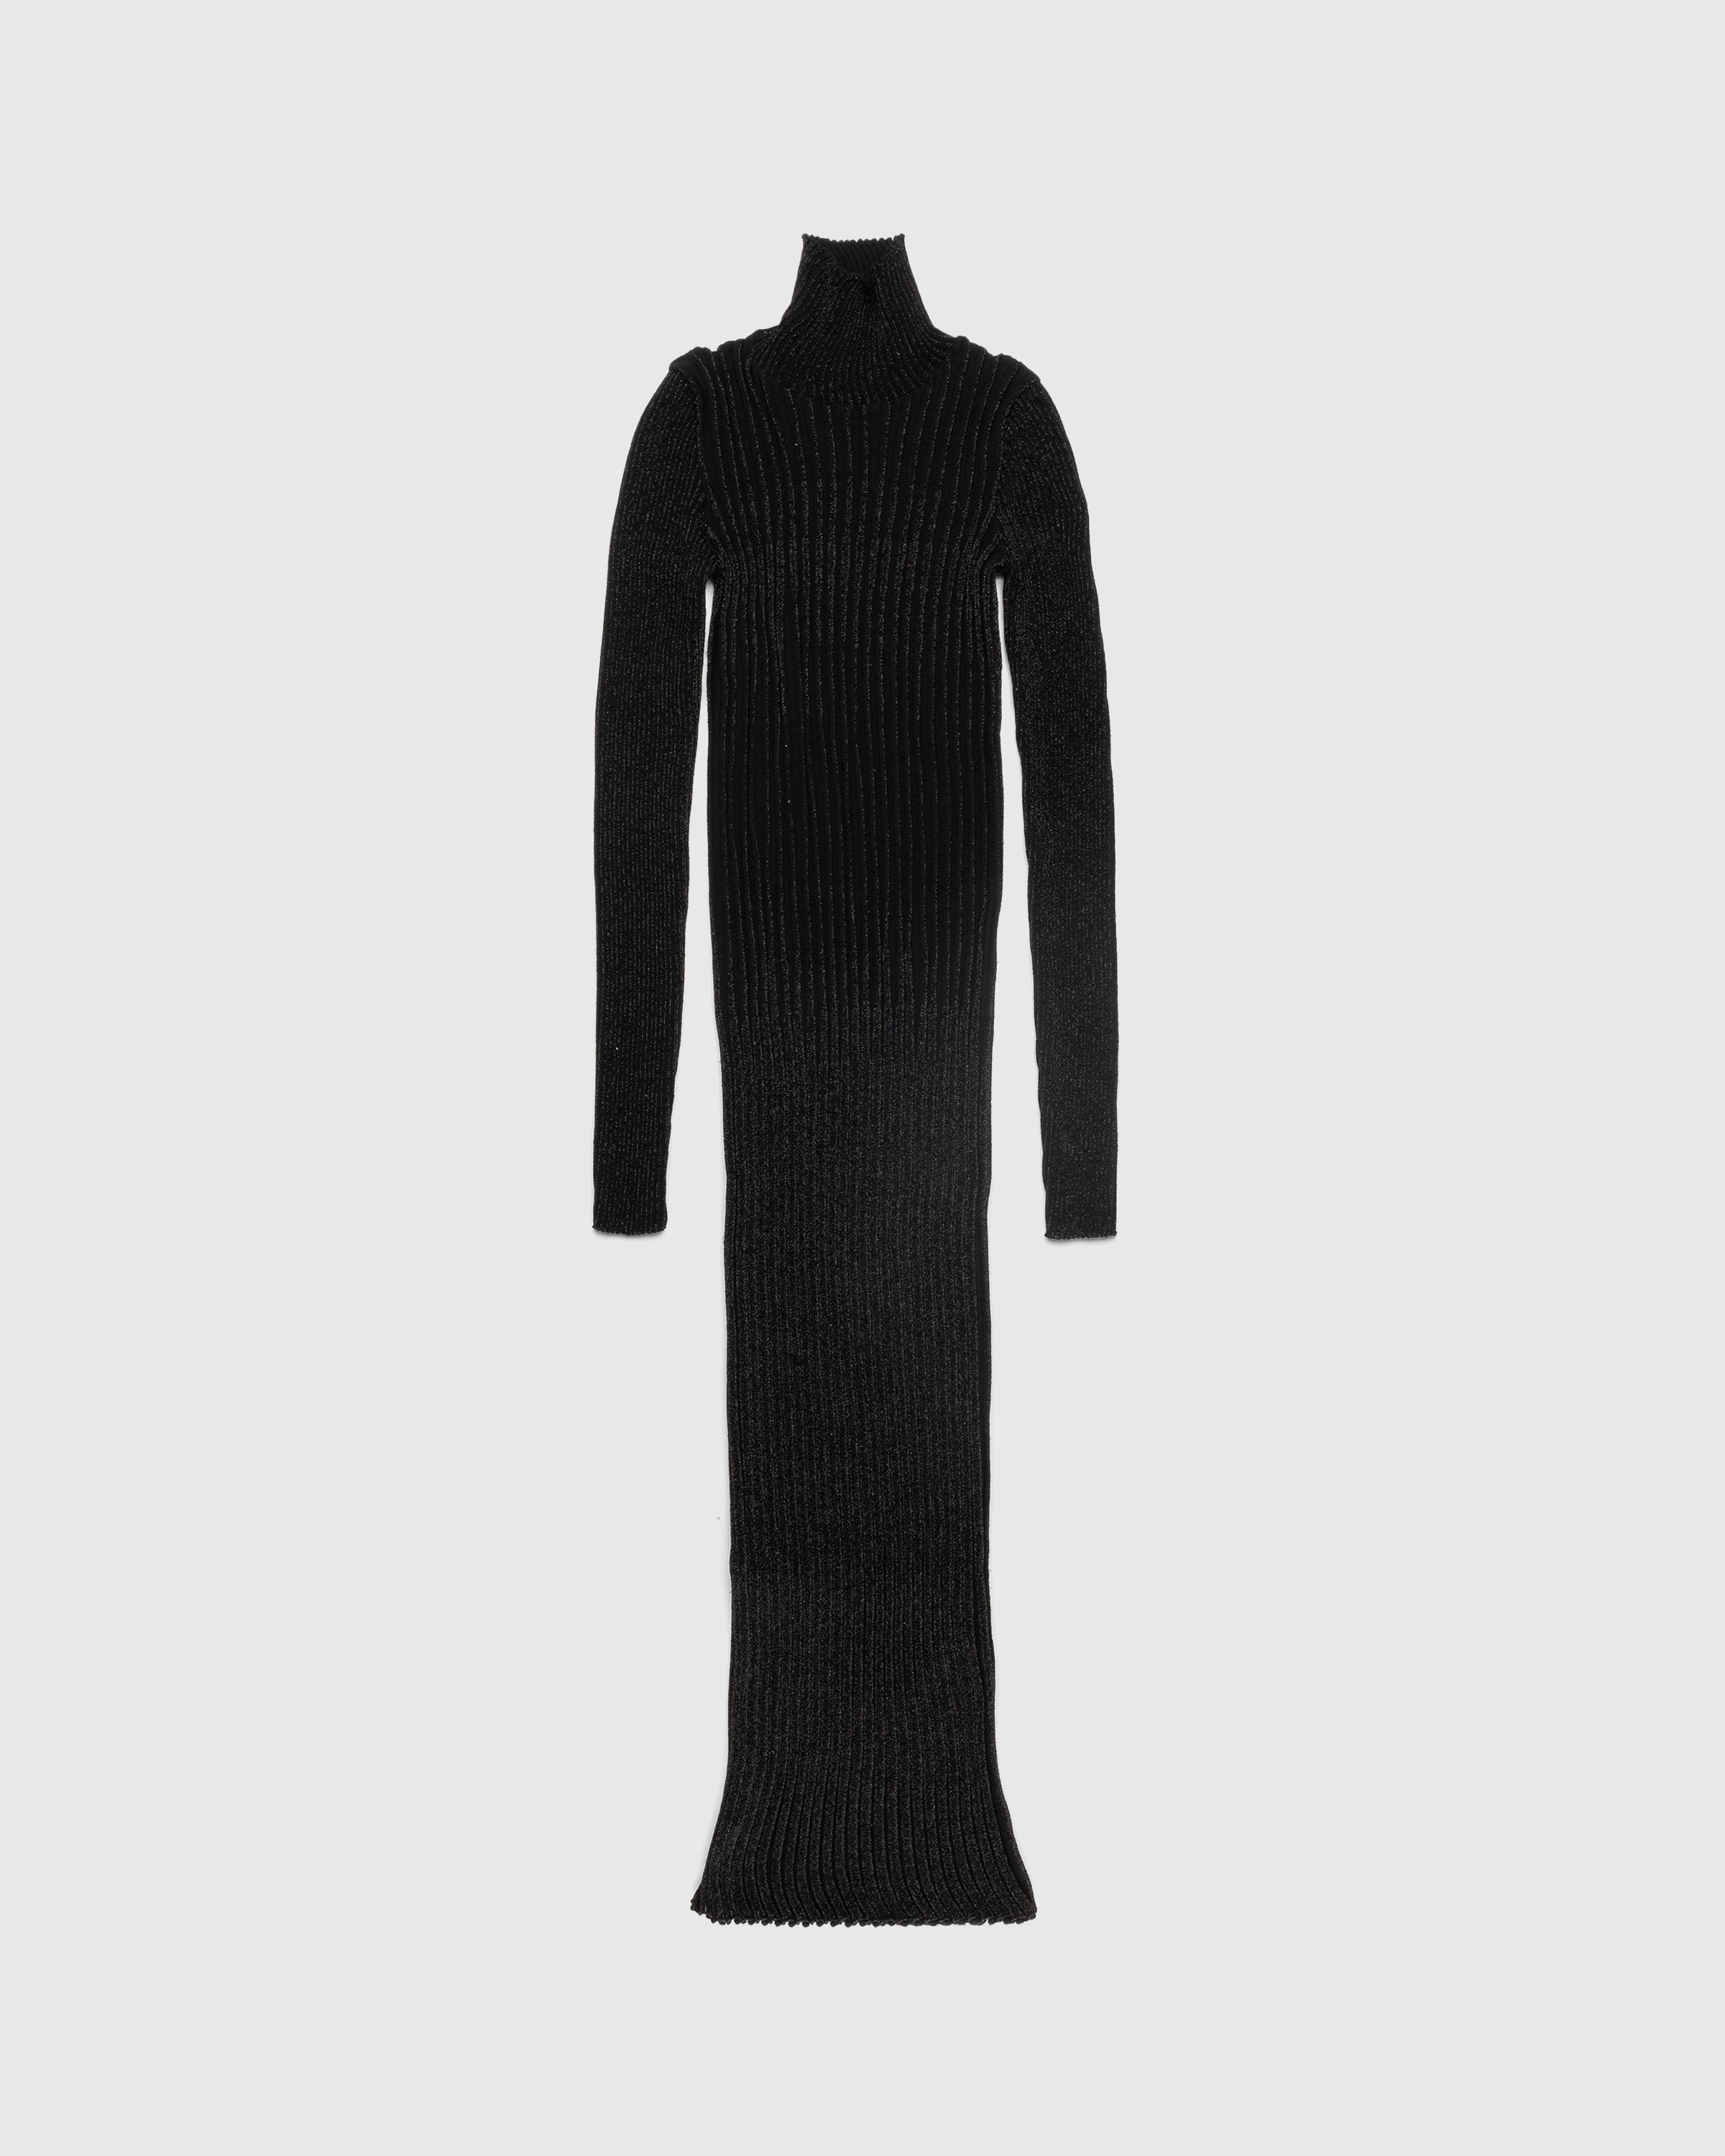 Jean Paul Gaultier - High Neck Long Dress Black - Clothing - Black - Image 1